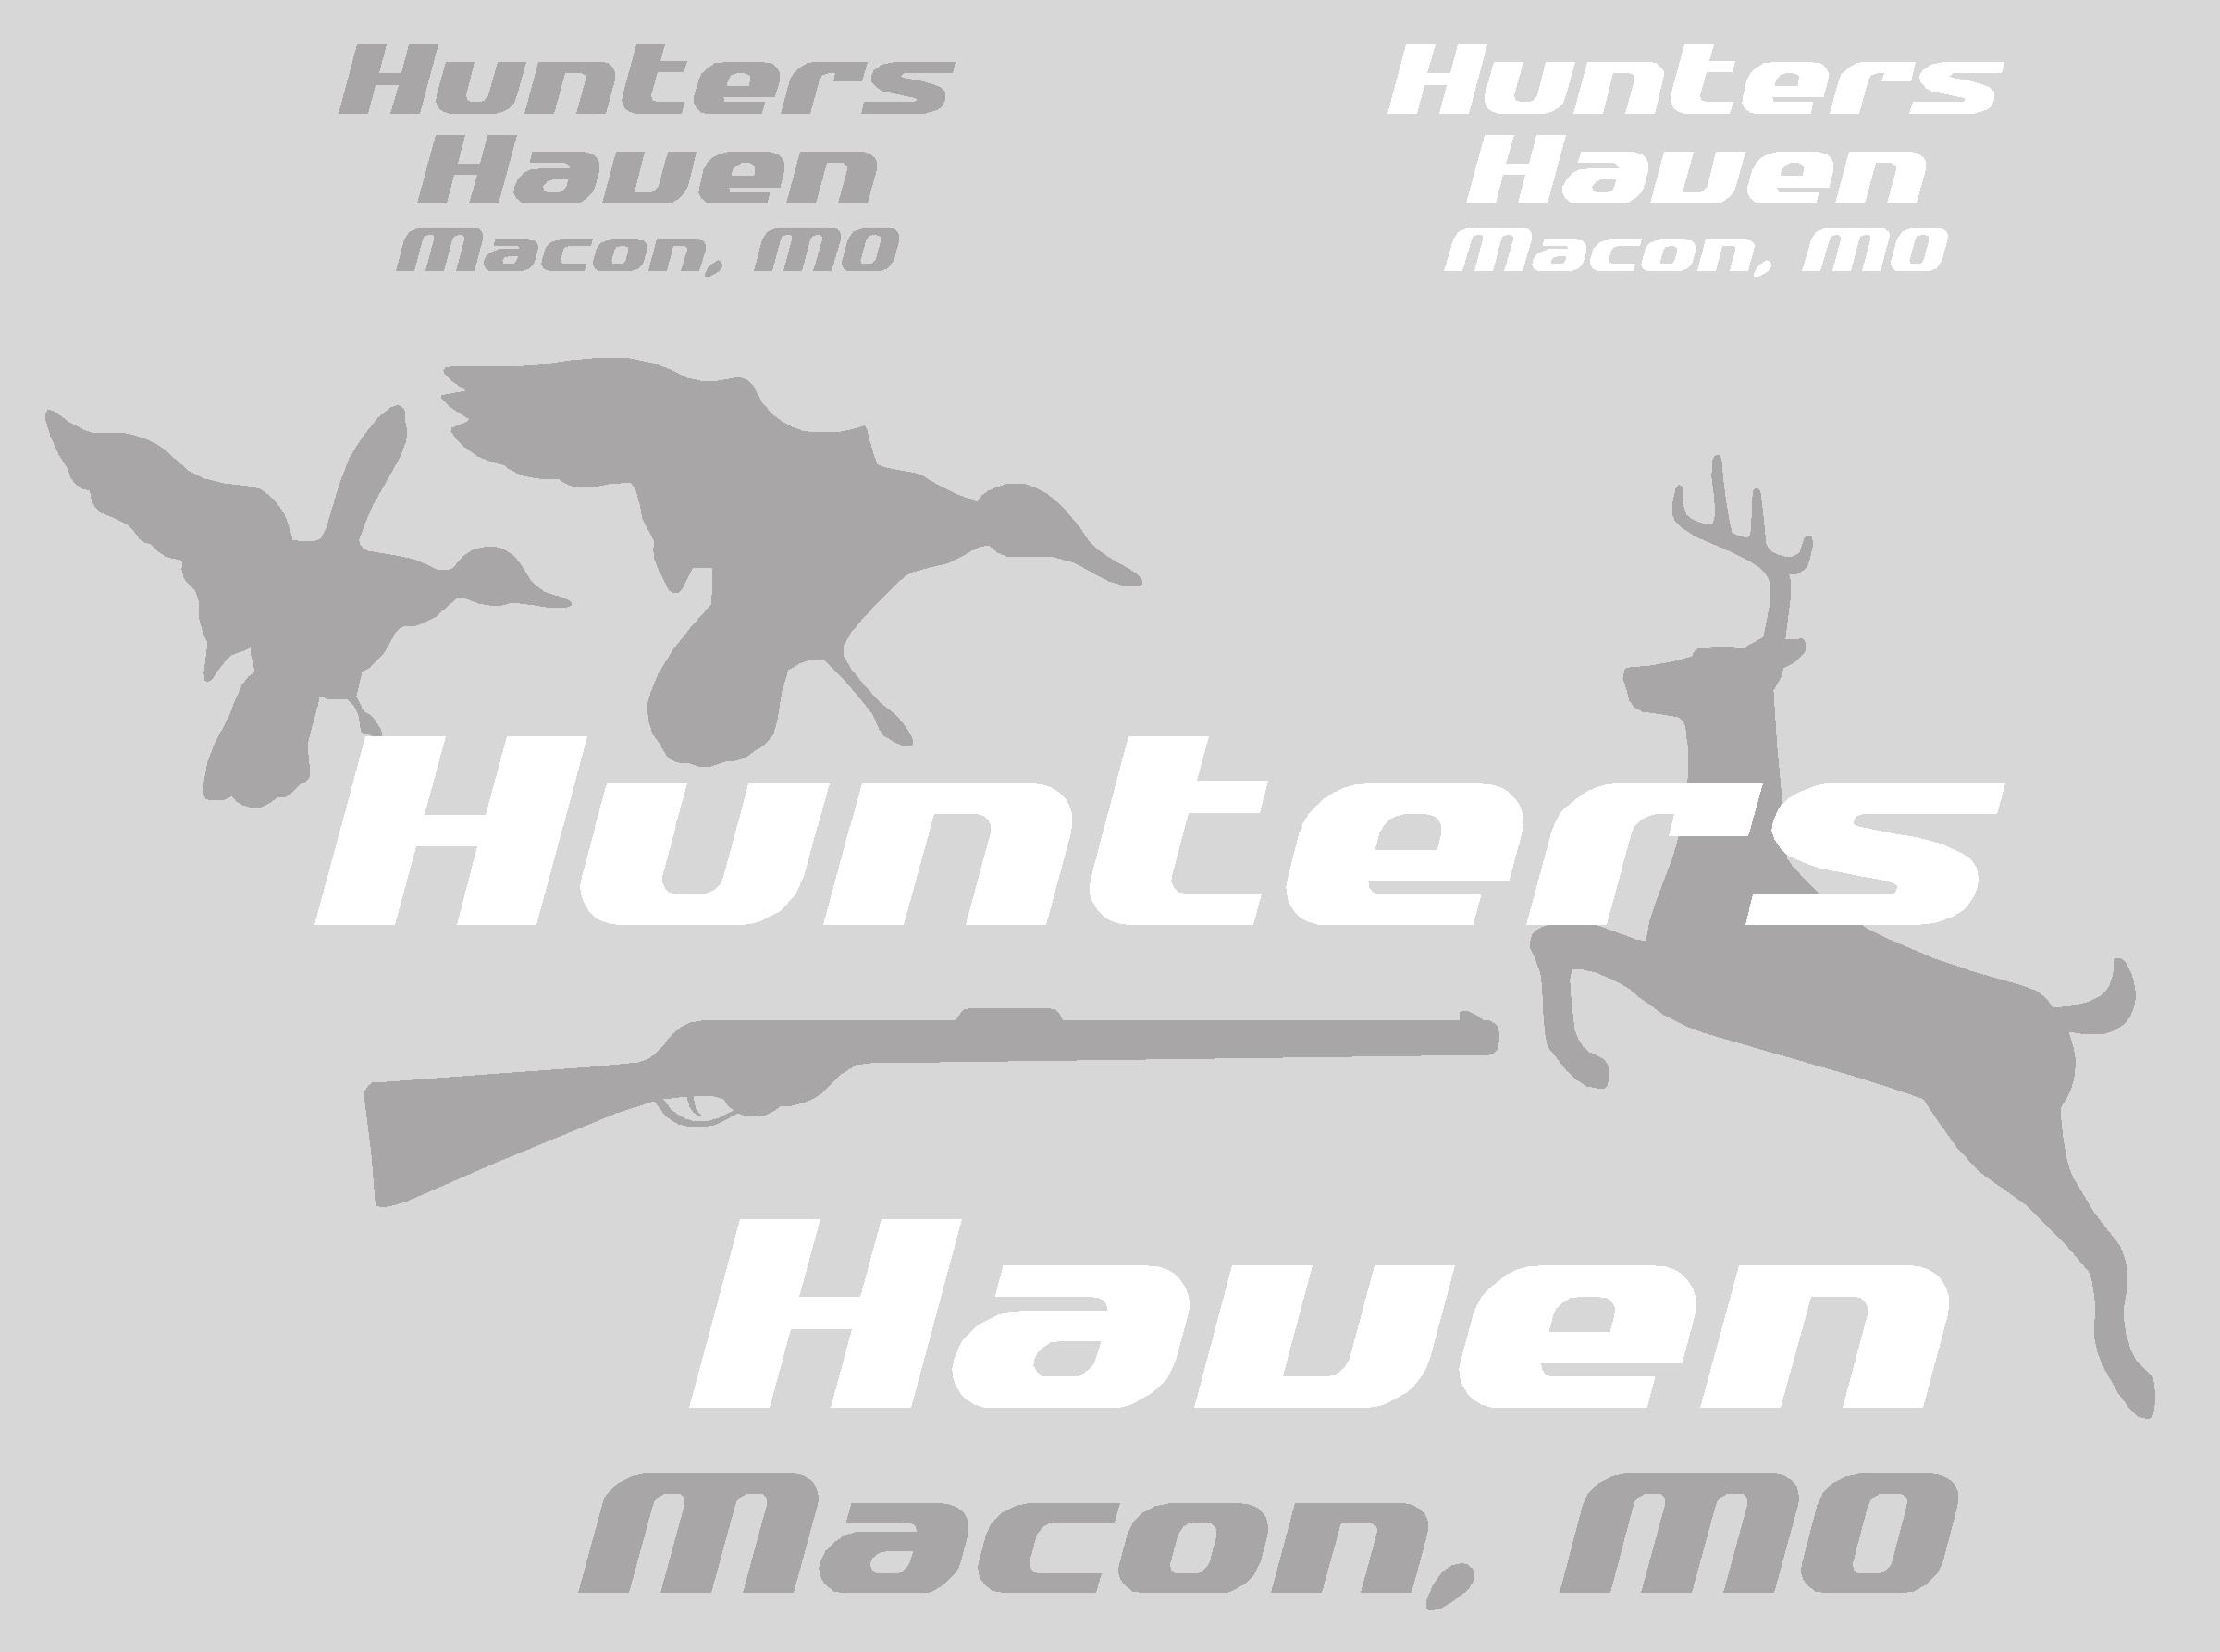 Hunters Haven